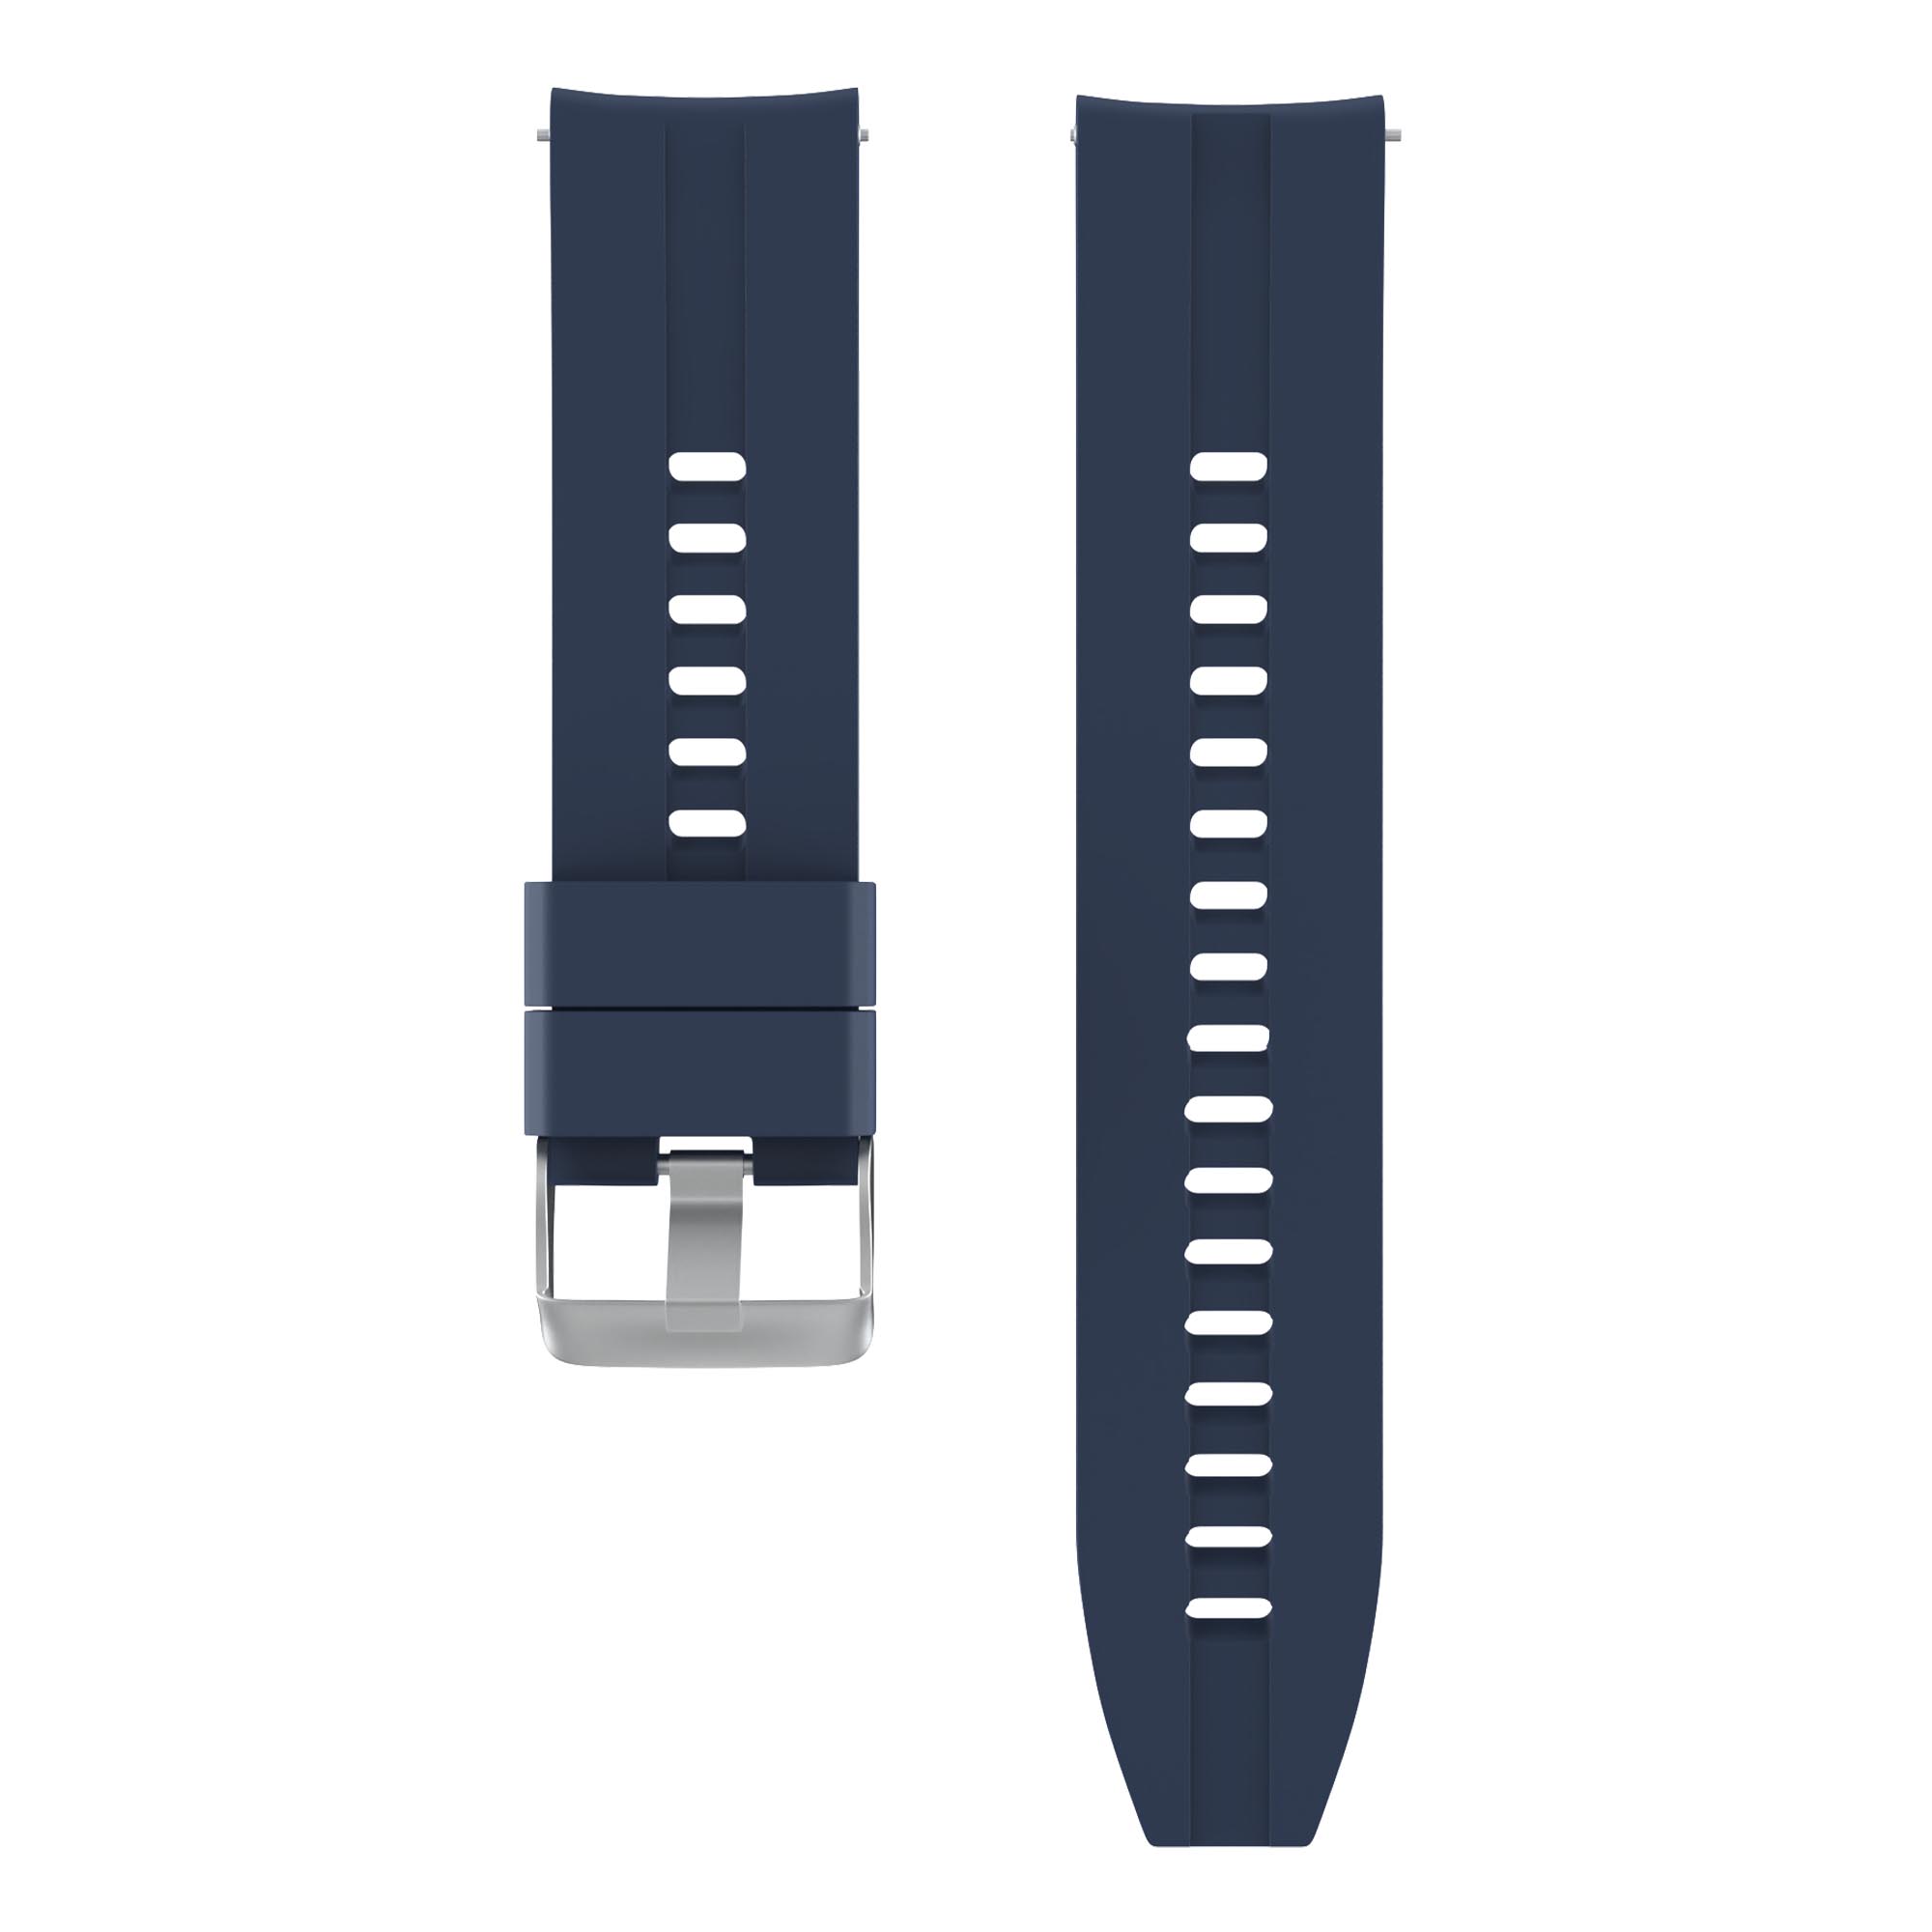 Silikonarmband Till Smartwatch 22mm Universal - Mörkblå